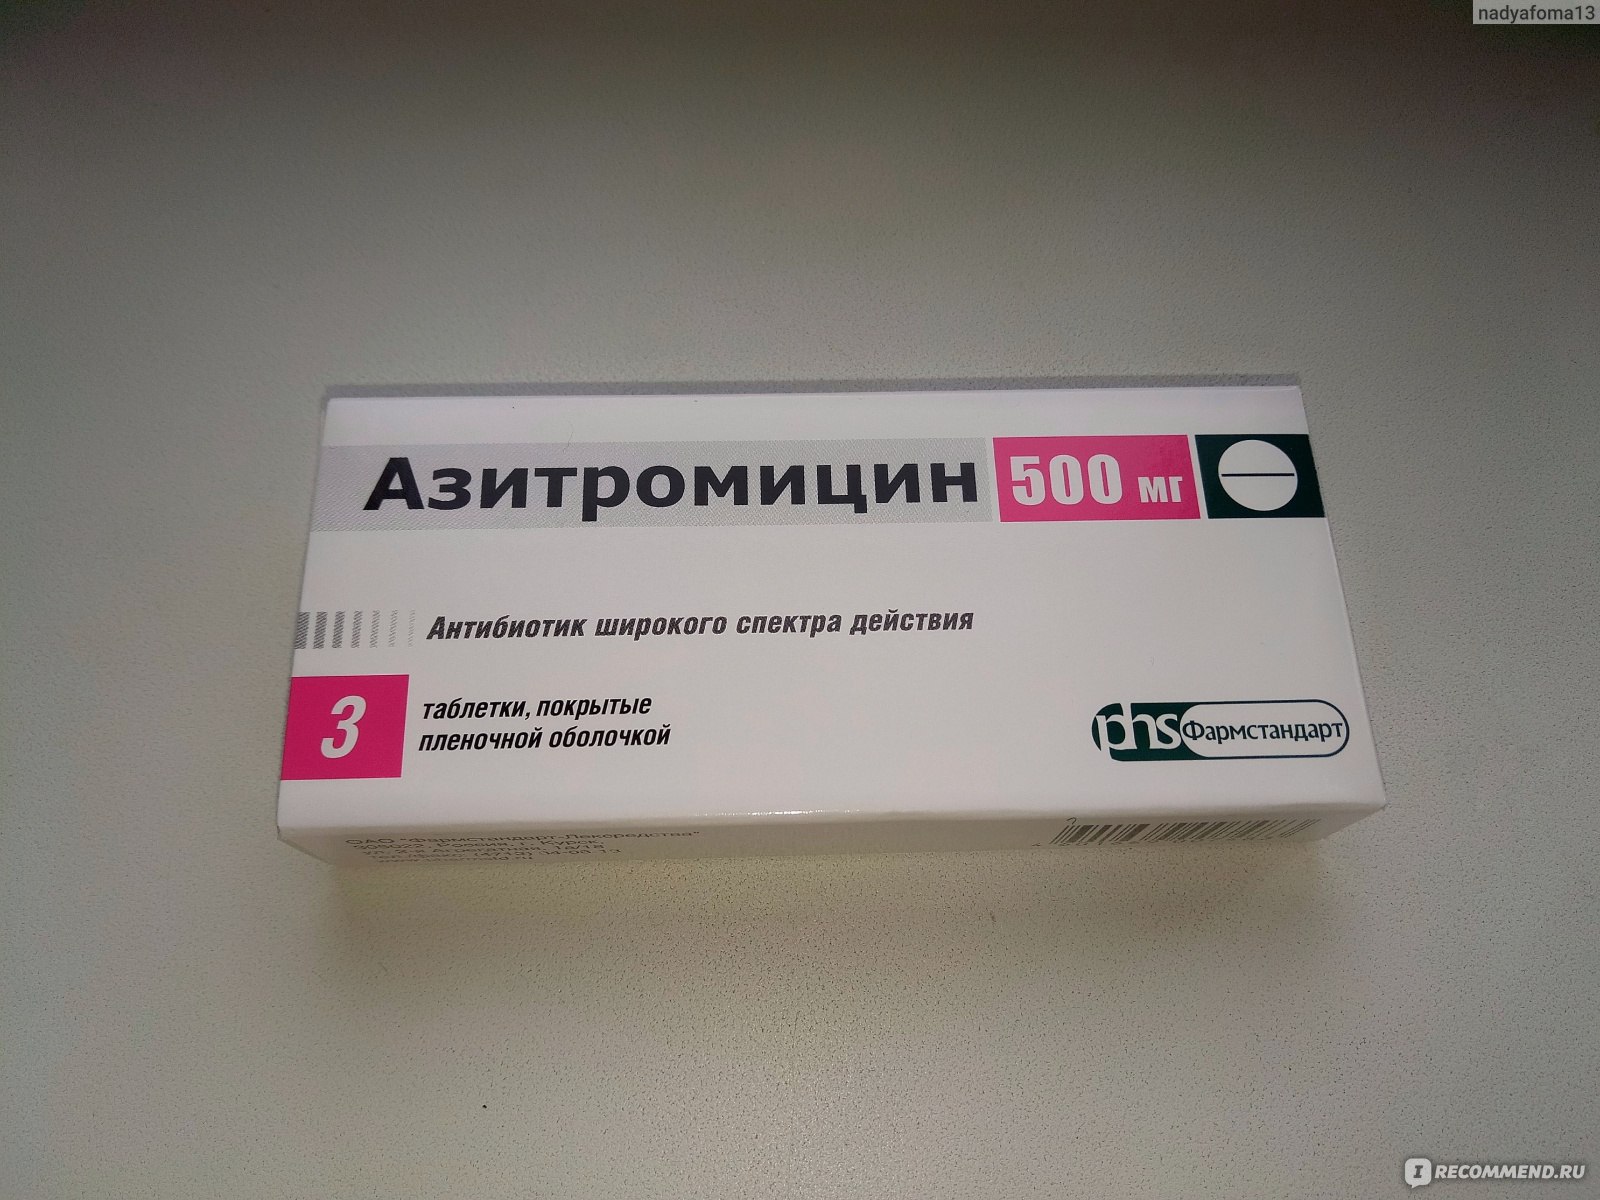 Сильные антибиотики в таблетках. Антибиотик Азитромицин 500 мг. Азитромицин 500 мг Фармстандарт. Азитромицин 500 антибиотик широкого спектра. Азитромицин Фармстандарт Лексредства.